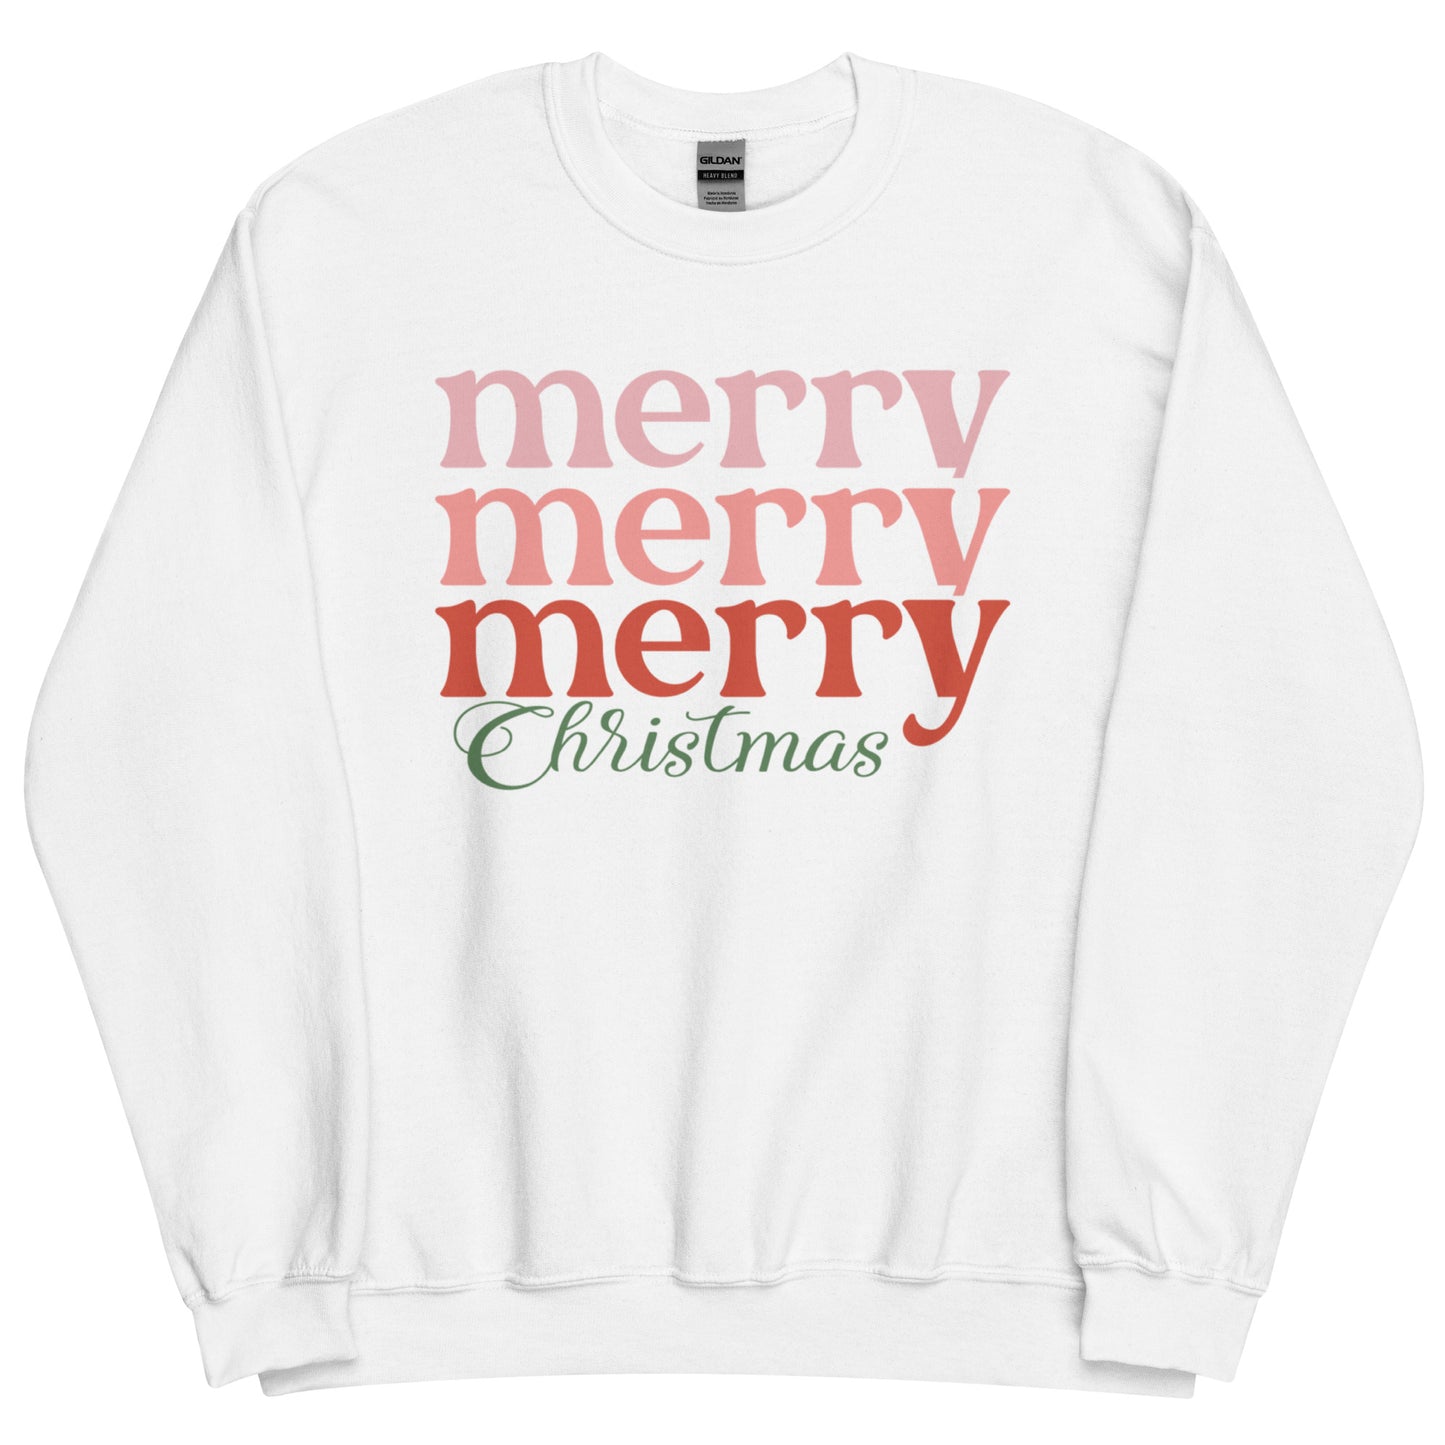 Merry Merry Merry Christmas Unisex Sweatshirt